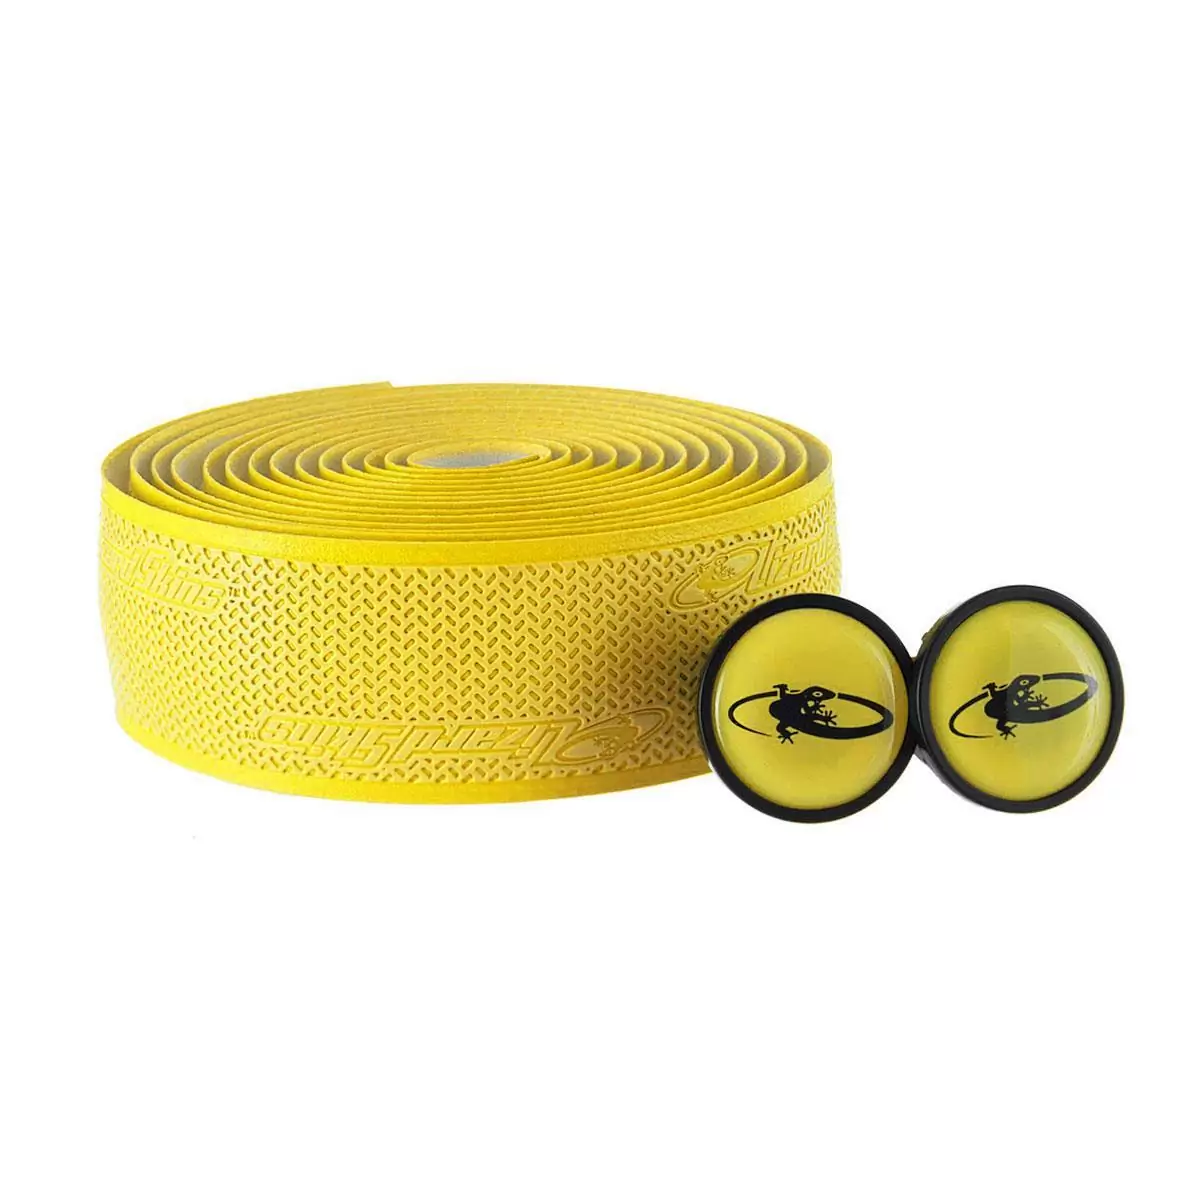 handlebar tape dsp 2,5mm yellow - image